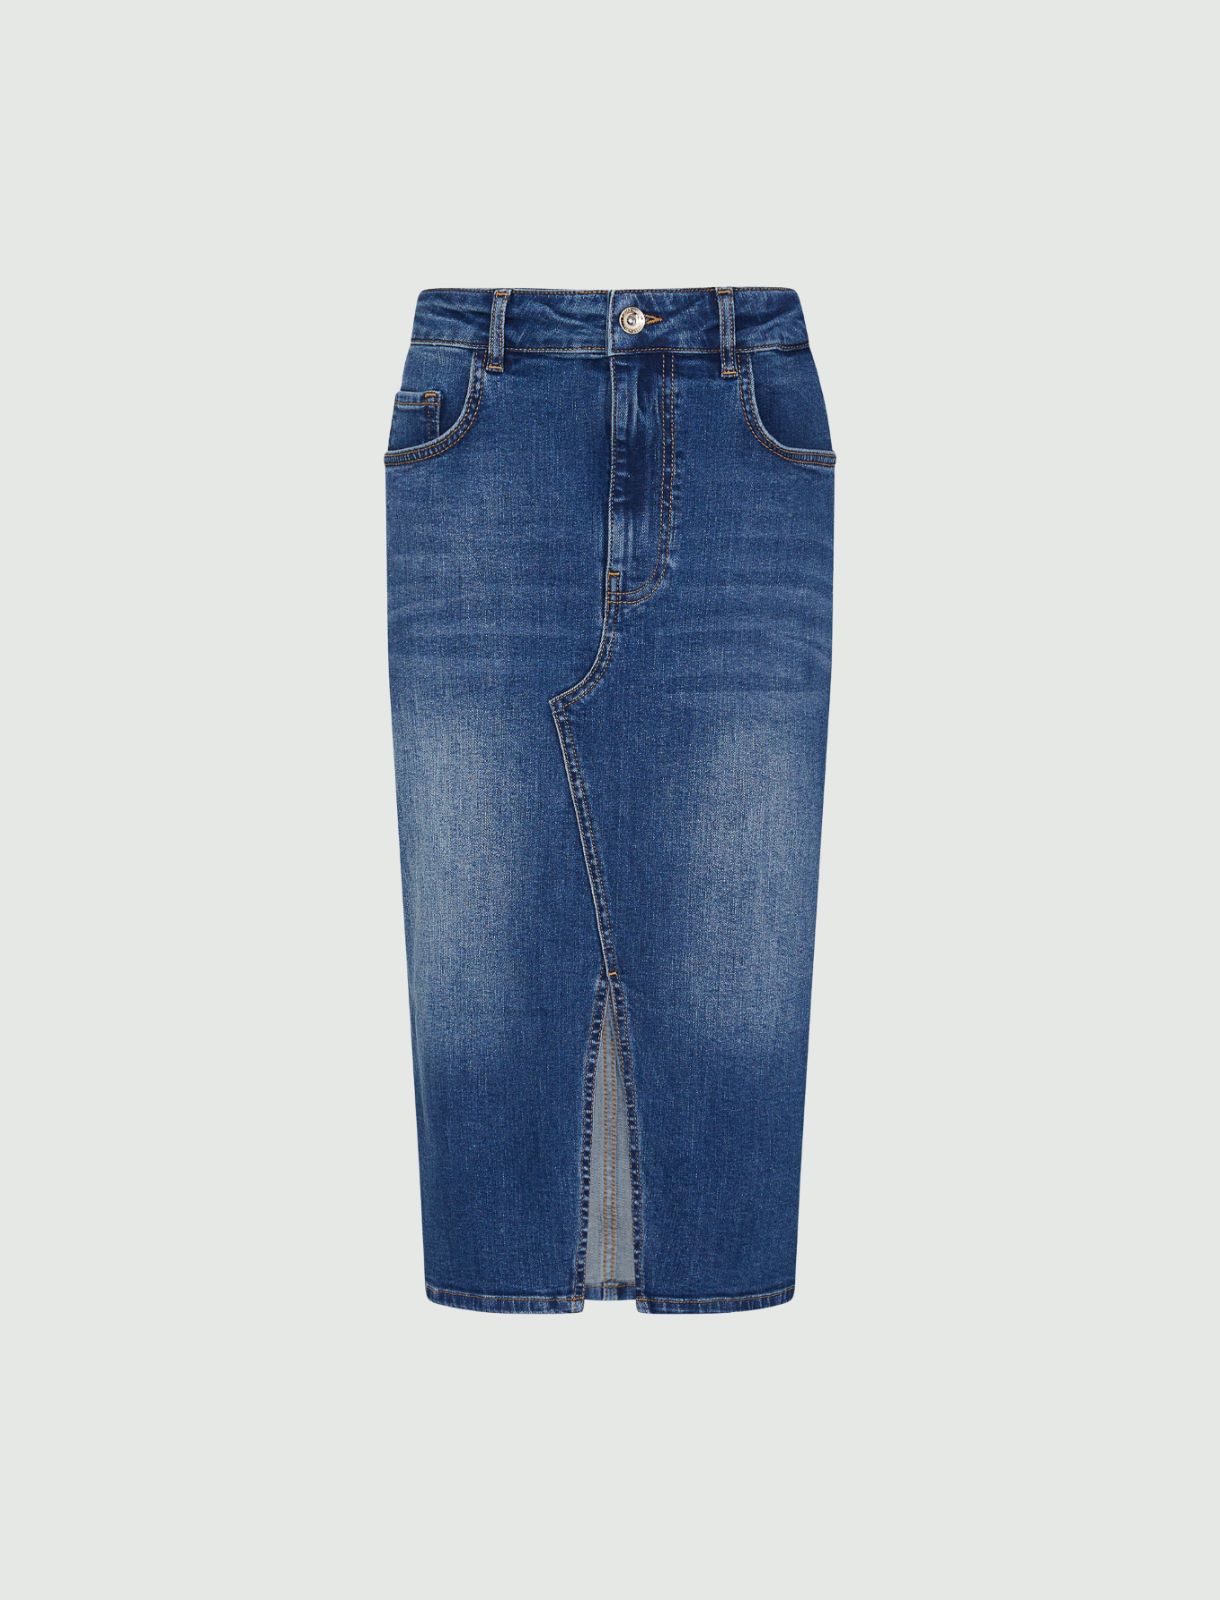 Denim skirt - Blue jeans - Marella - 4